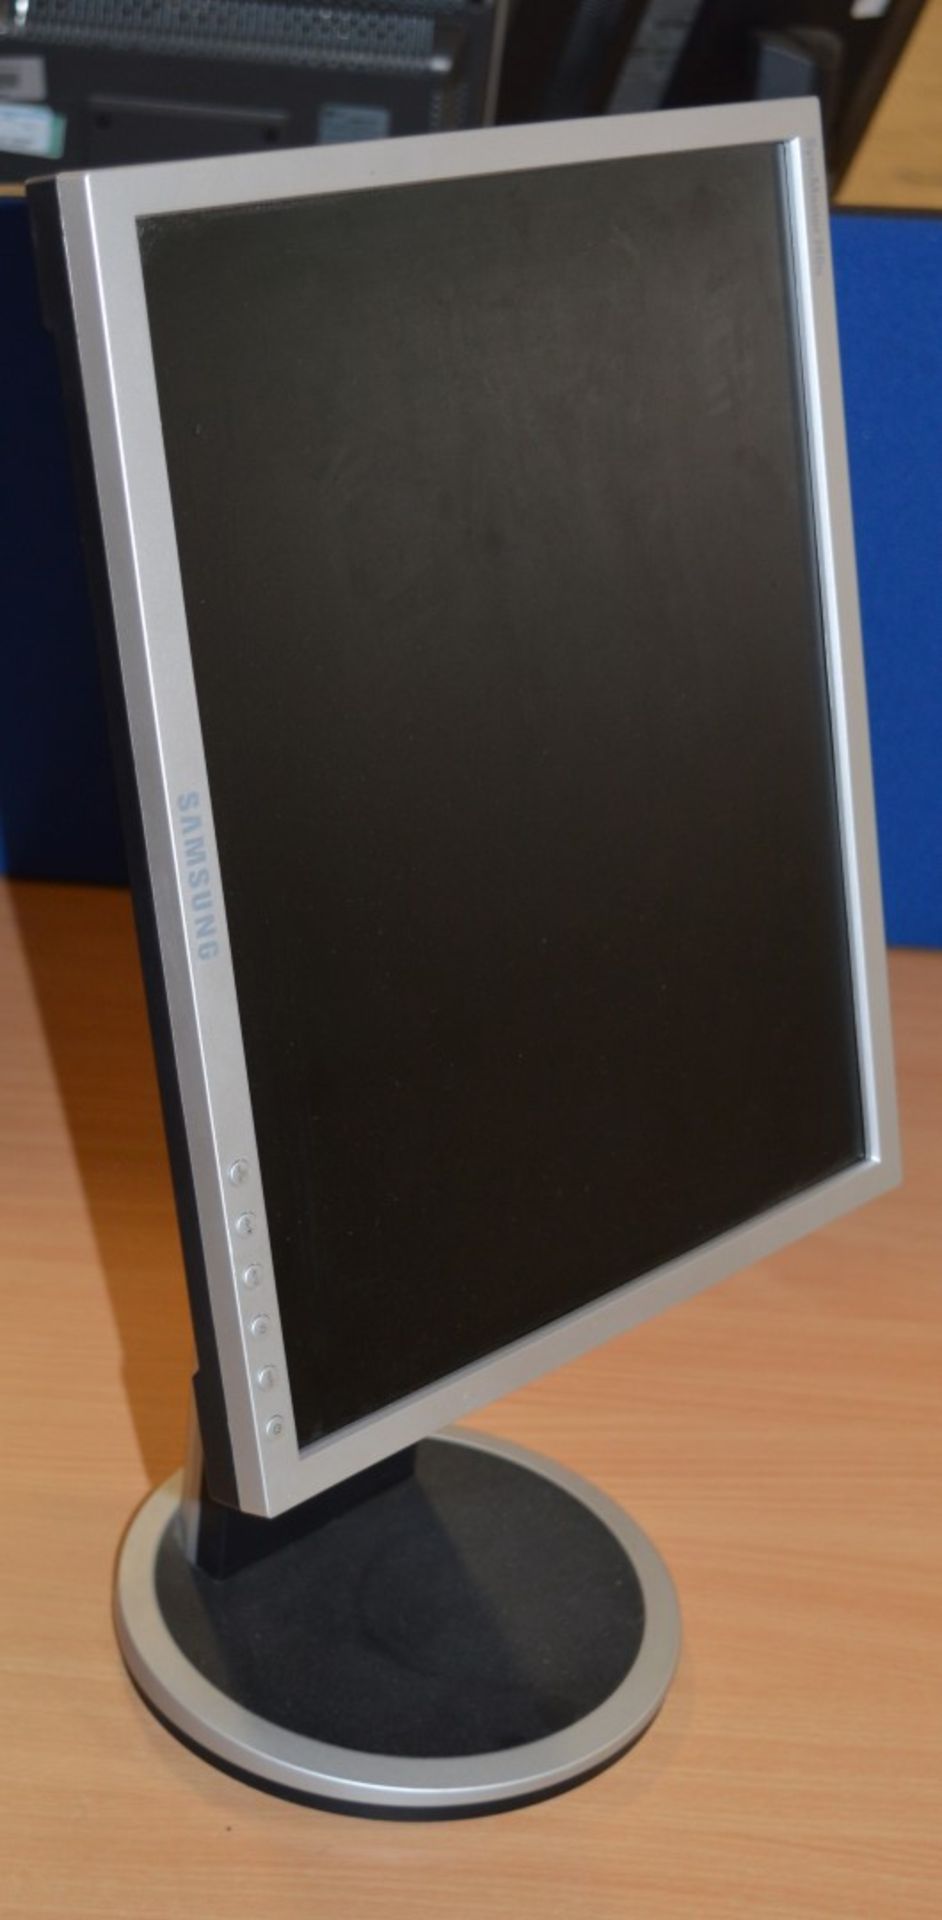 1 x Samsung Syncmaster 740N Flatscreen LCD Monitor - 17 Inch Screen Size - 1280 x 1024 Native - Image 2 of 4